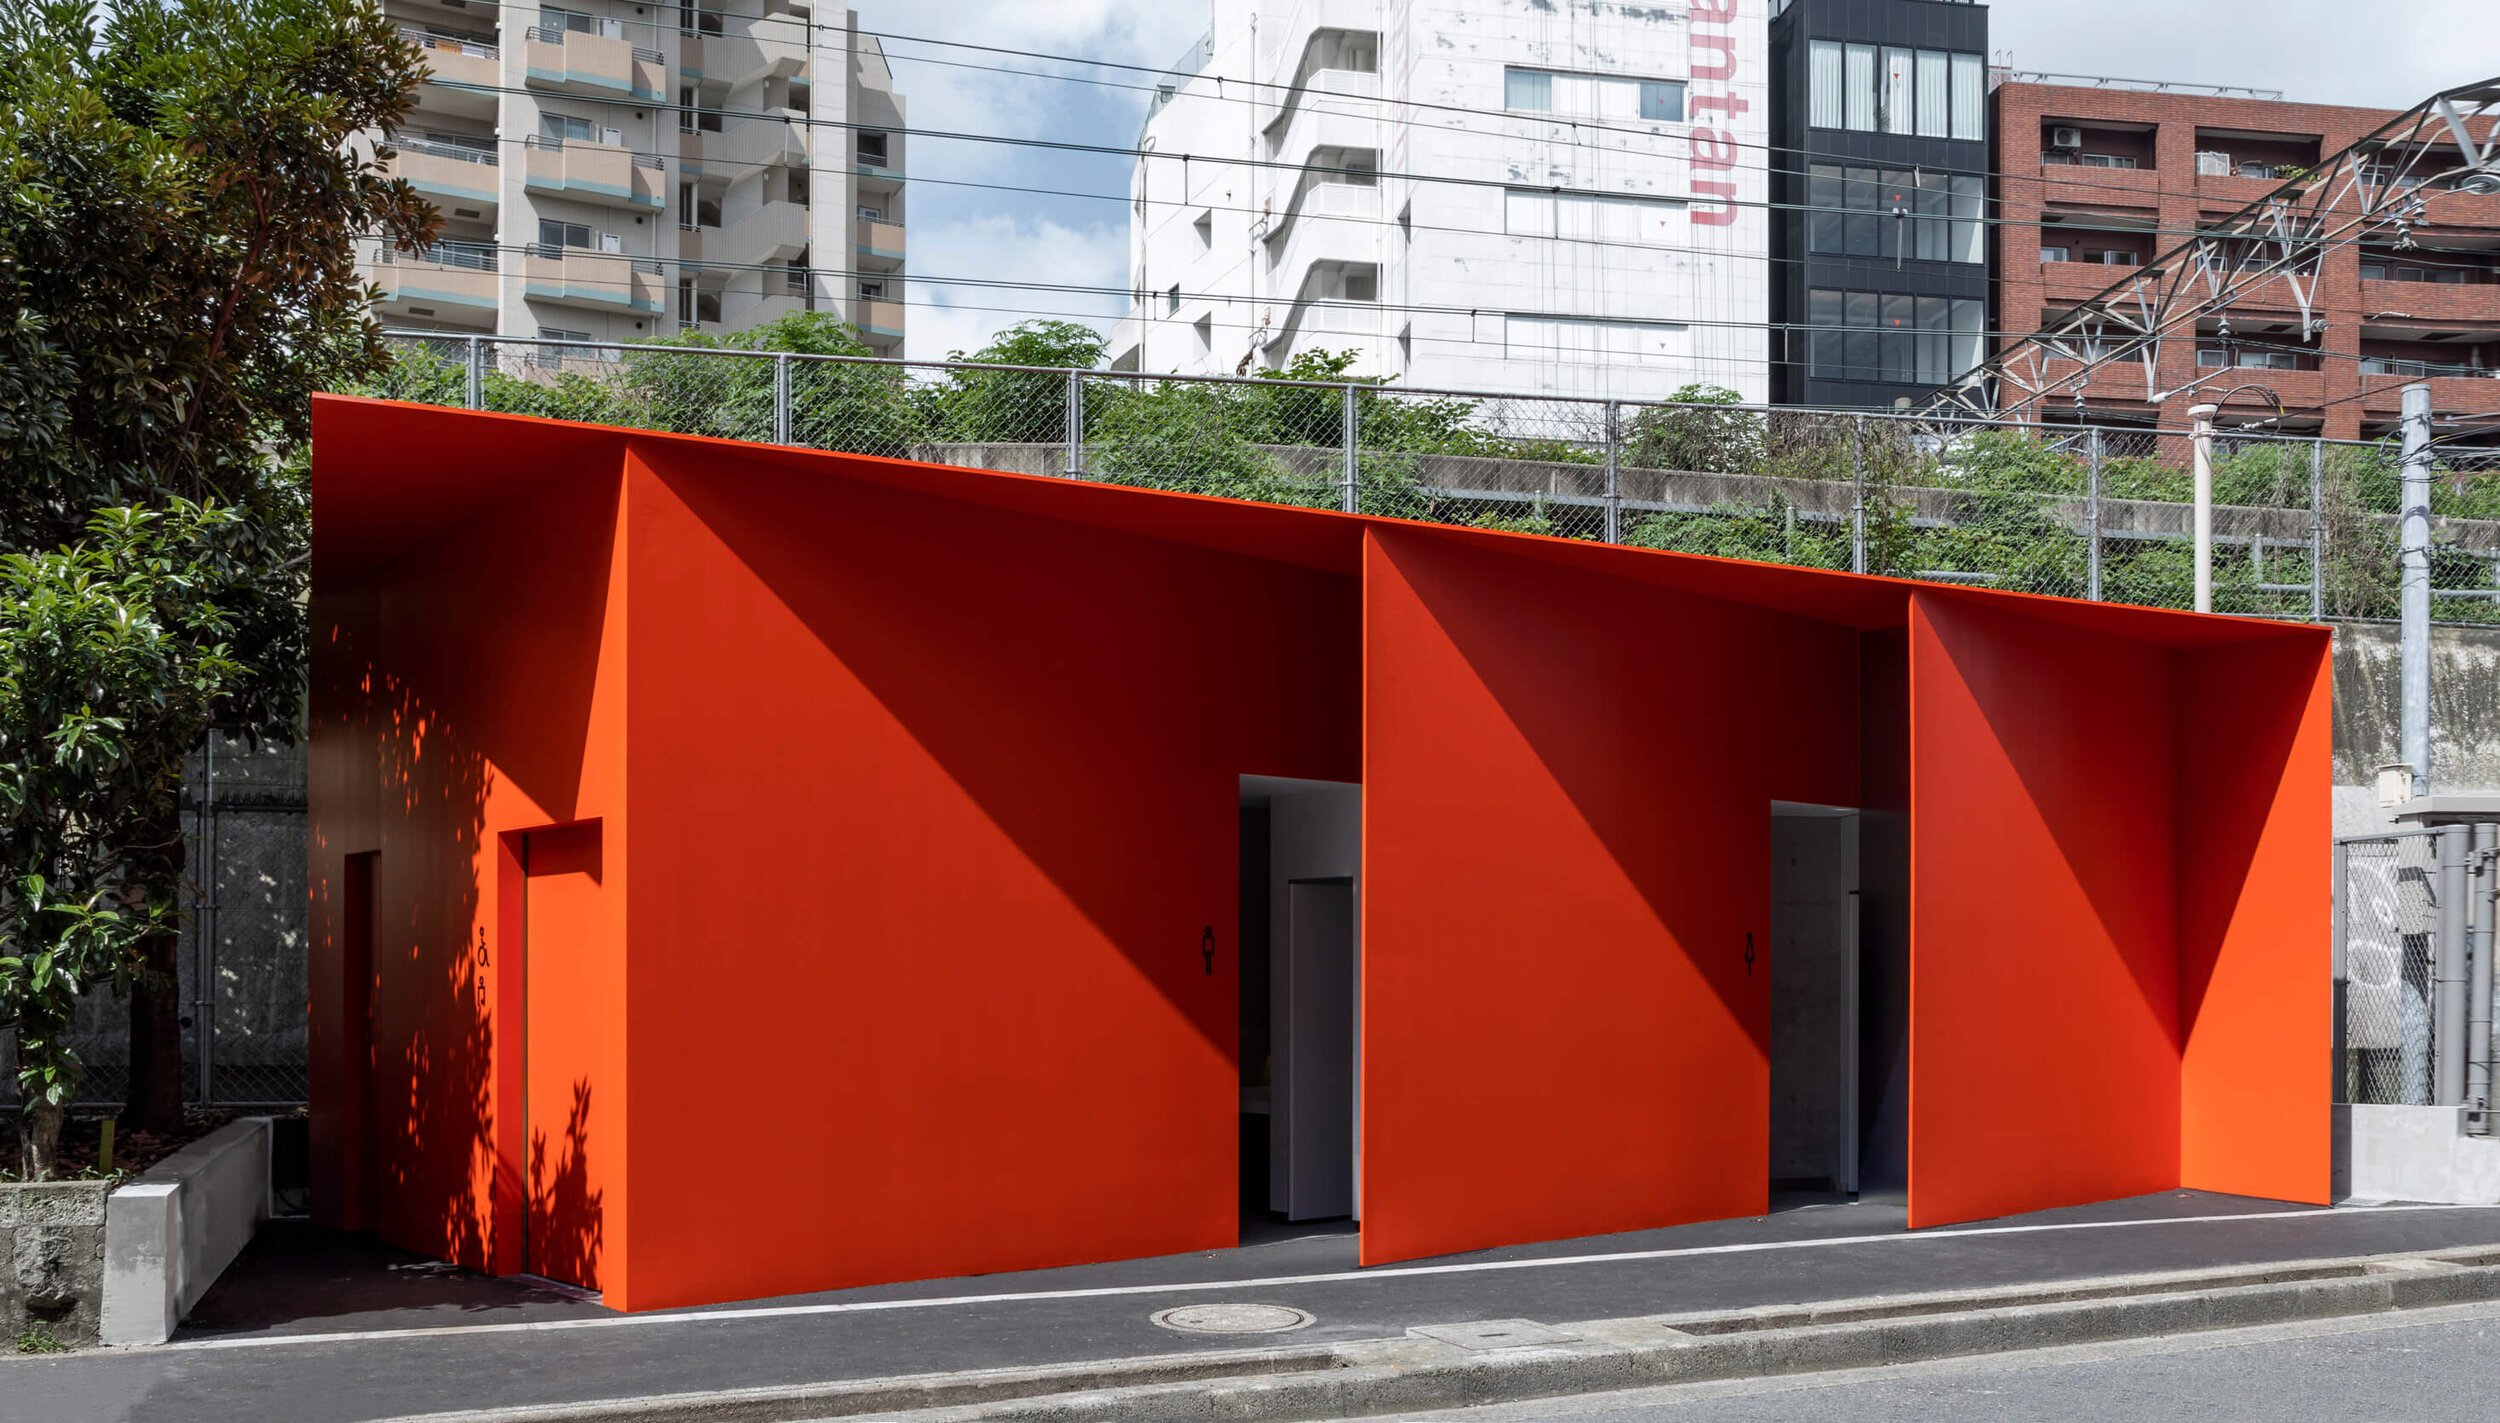  Facade design of triangle, a public toilet in Tokyo, designed by Nao Tamura. 